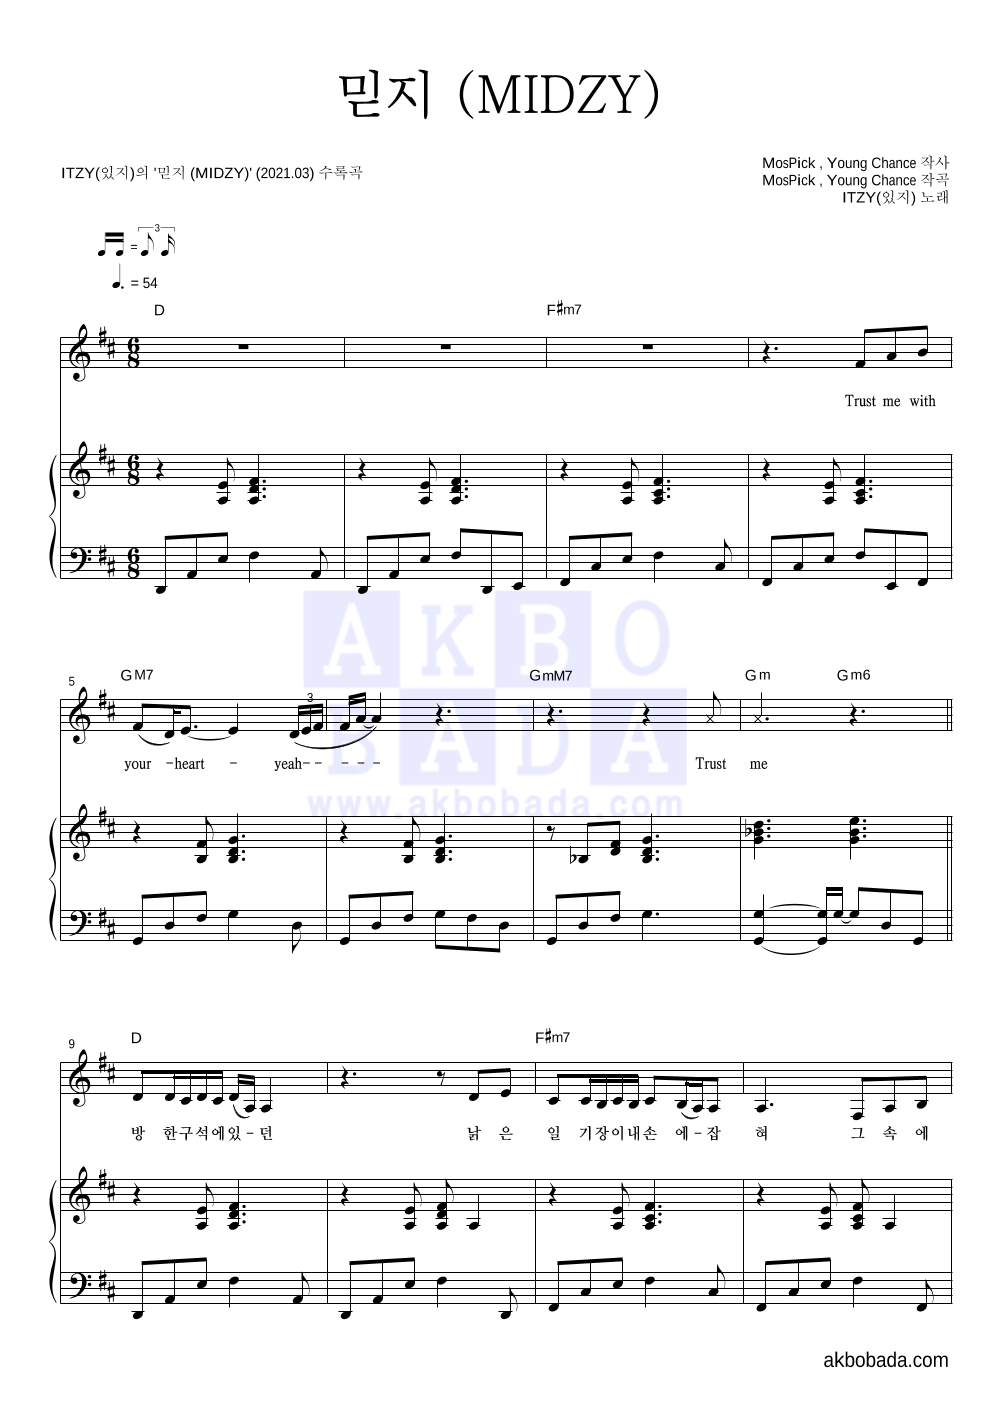 ITZY(있지) - 믿지 (MIDZY) 피아노 3단 악보 